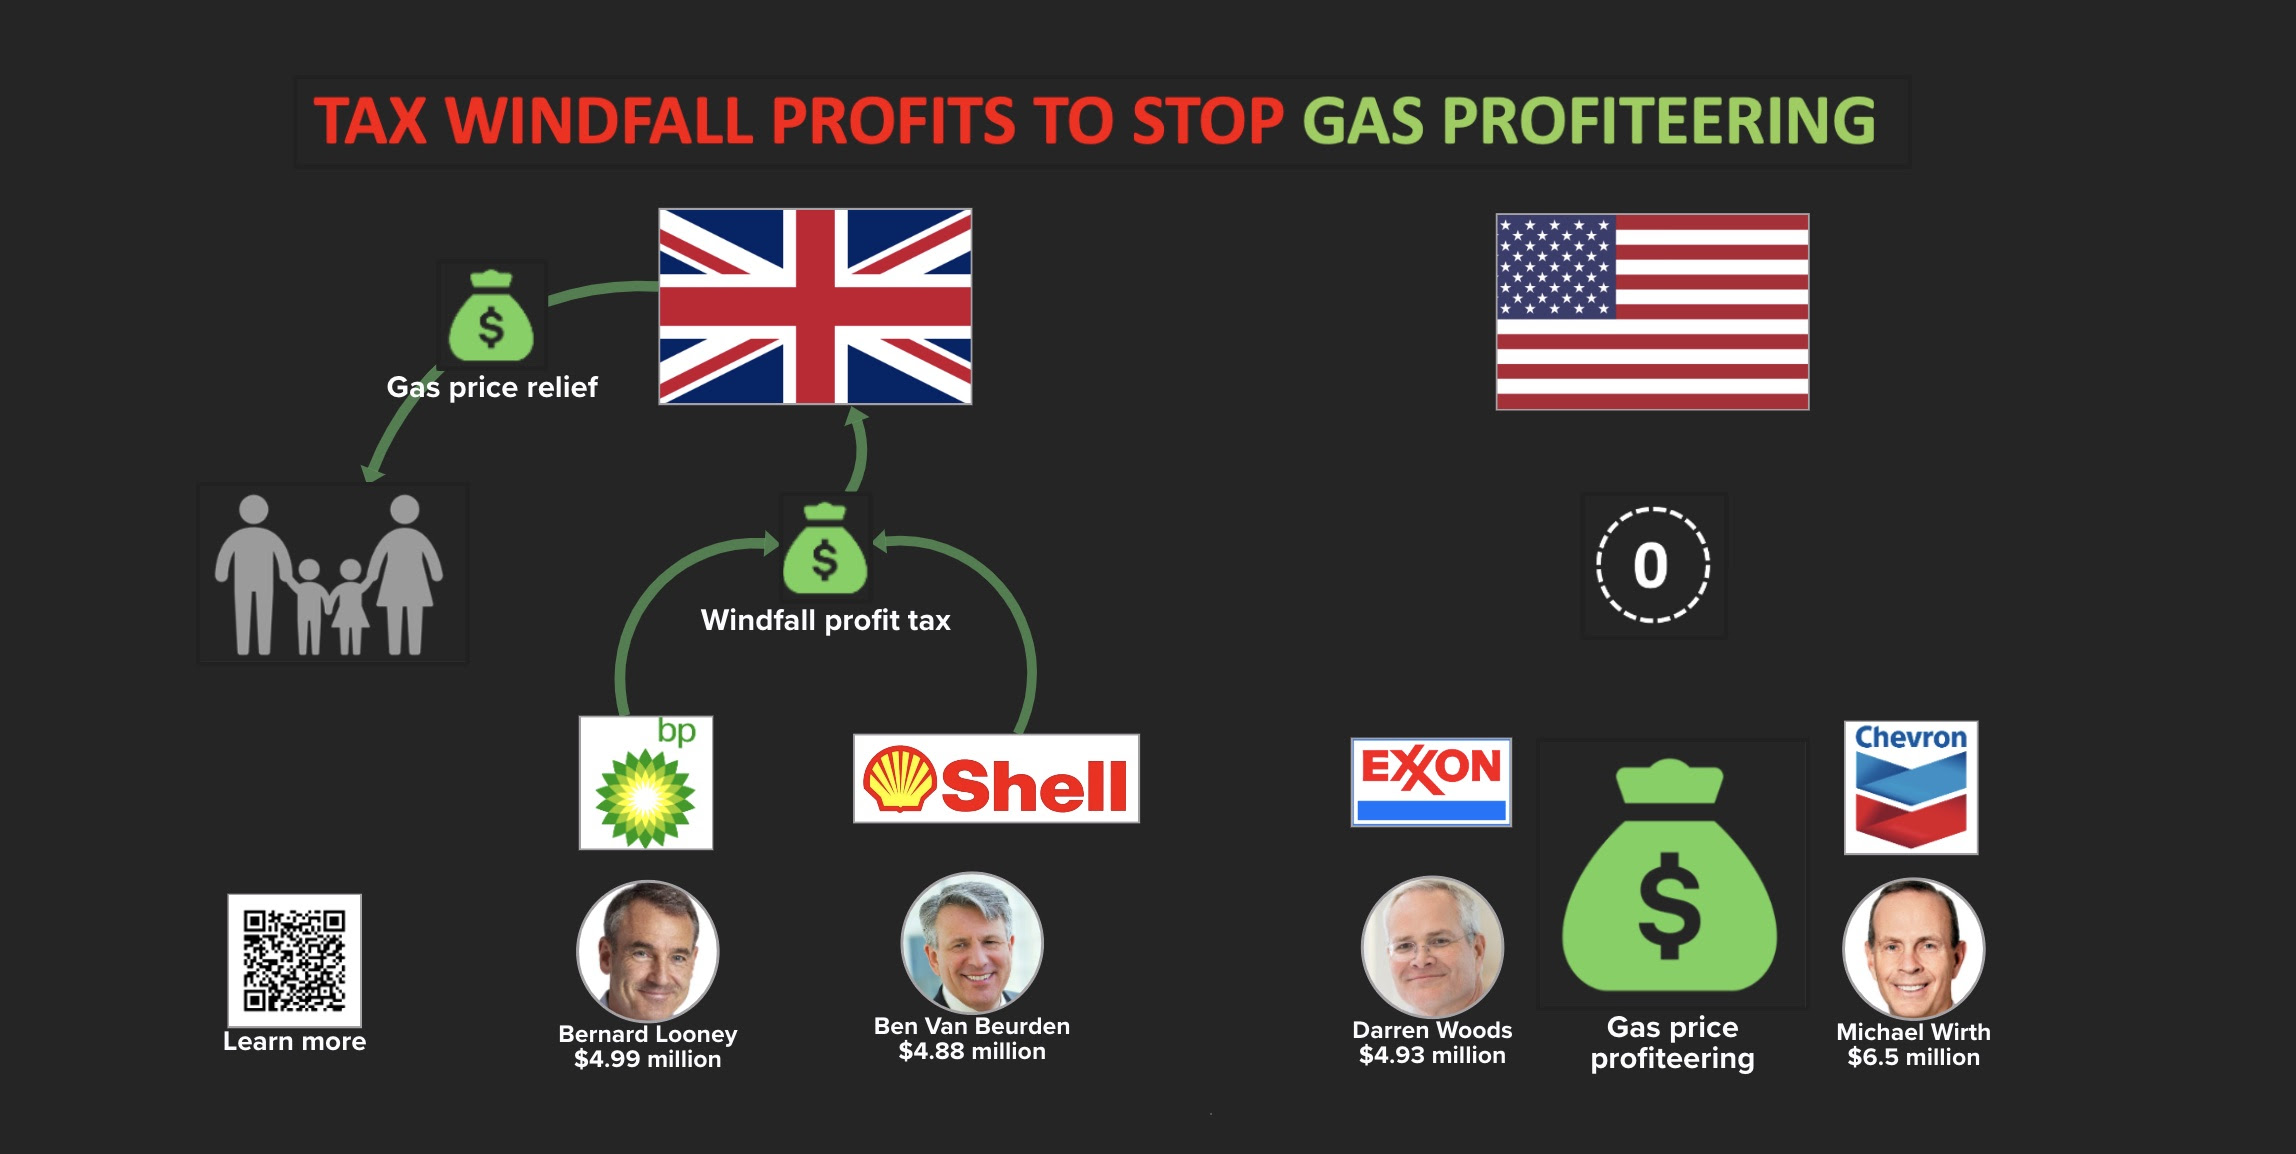 Tax windfall profits to stop gas profiteering